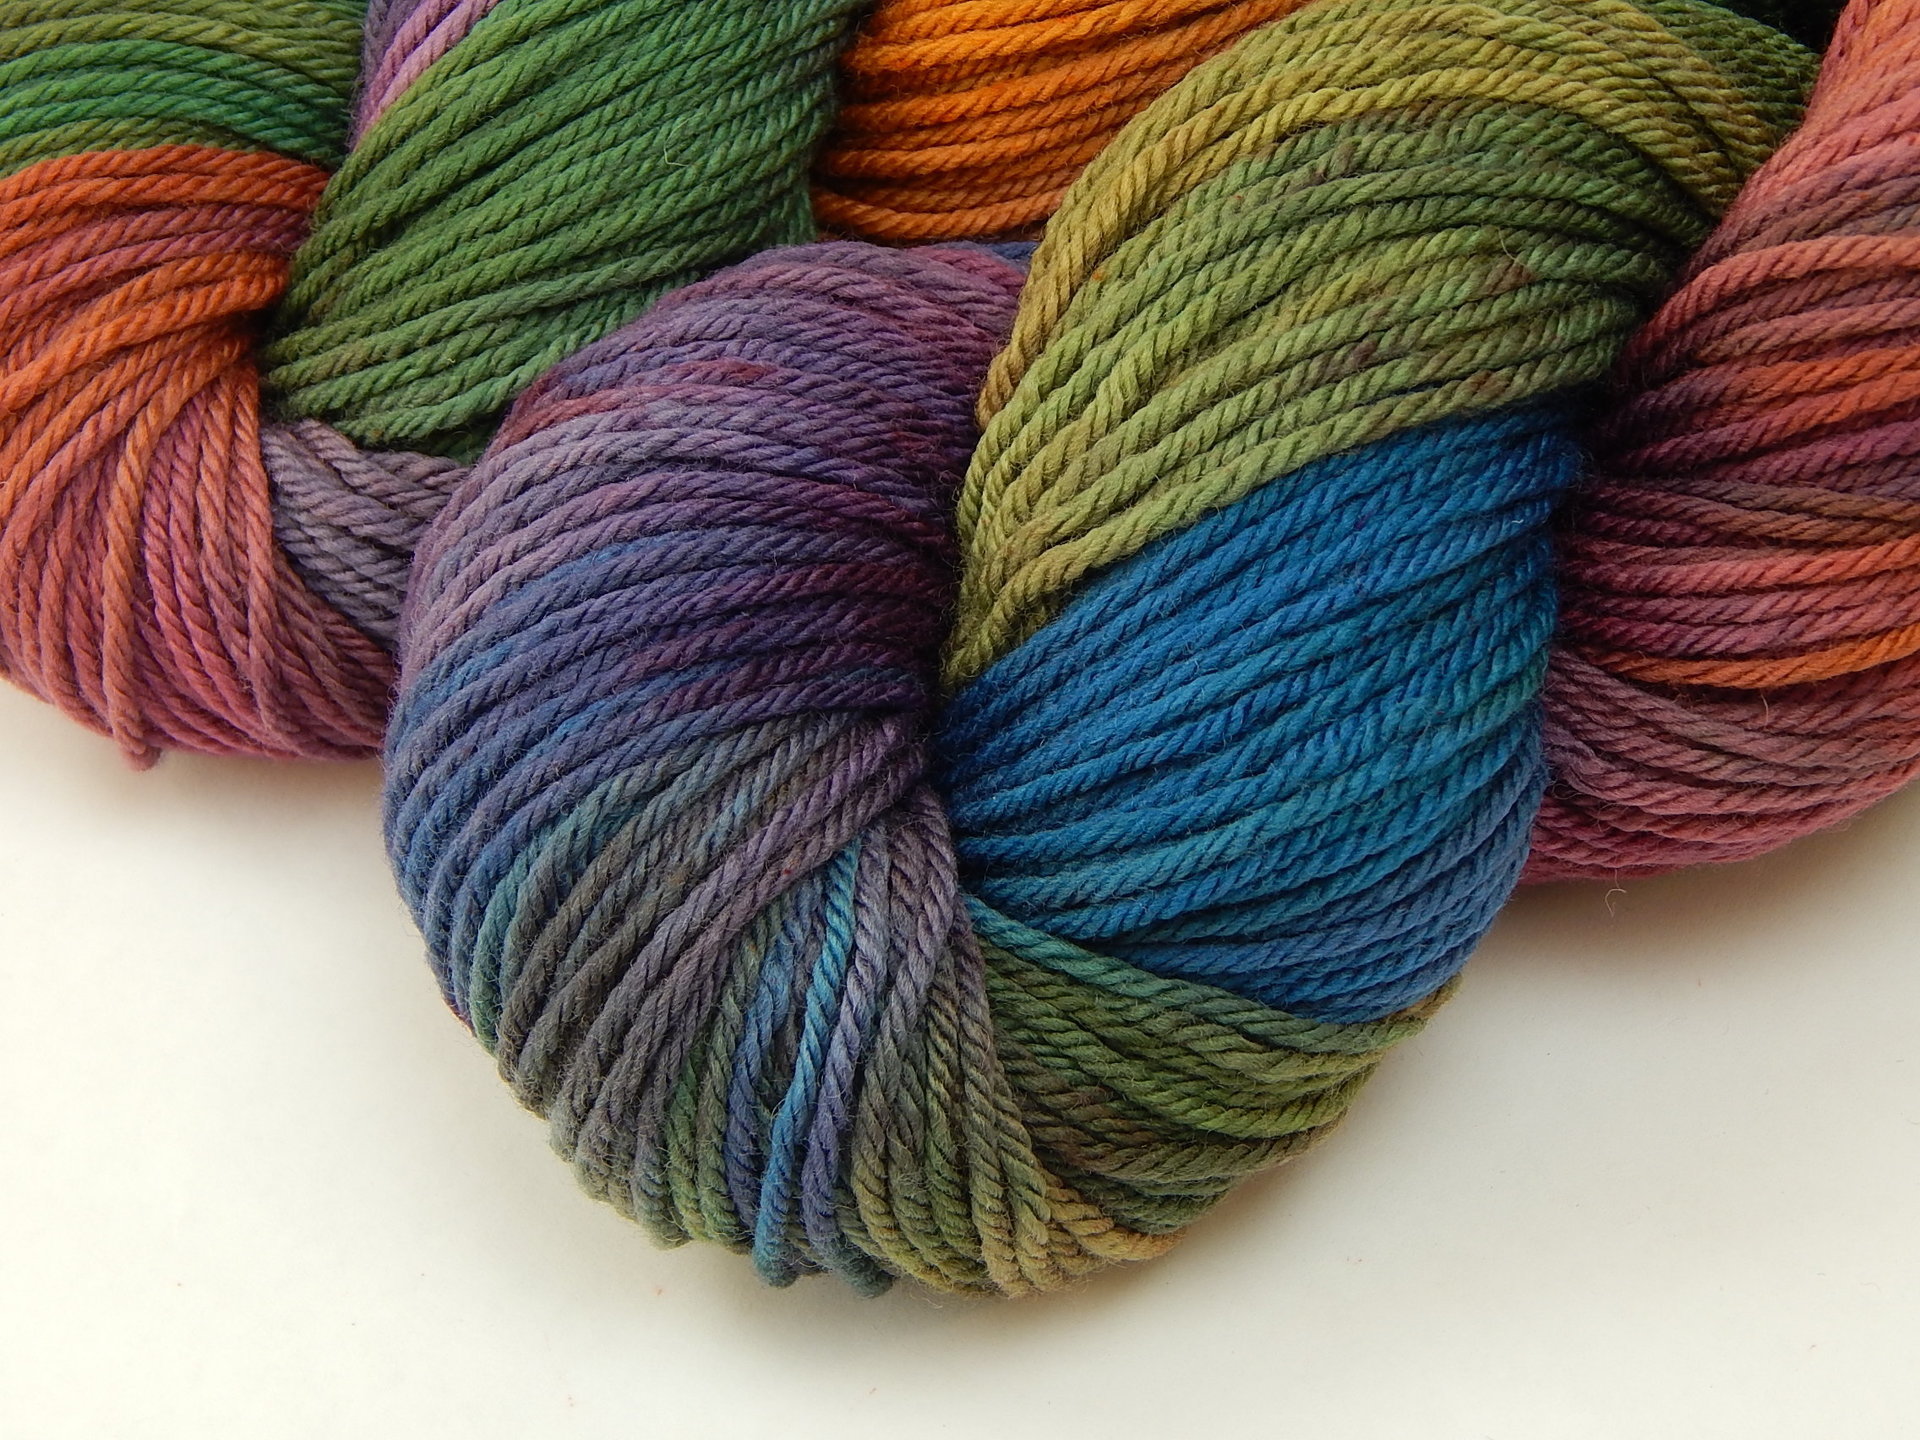 Worsted Weight Hand Dyed Yarn, 100% Superwash Merino Wool - Potluck Rainbow - Indie Dyer OOAK Knitting Crochet Yarn, Deep Rich Vibrant Colors